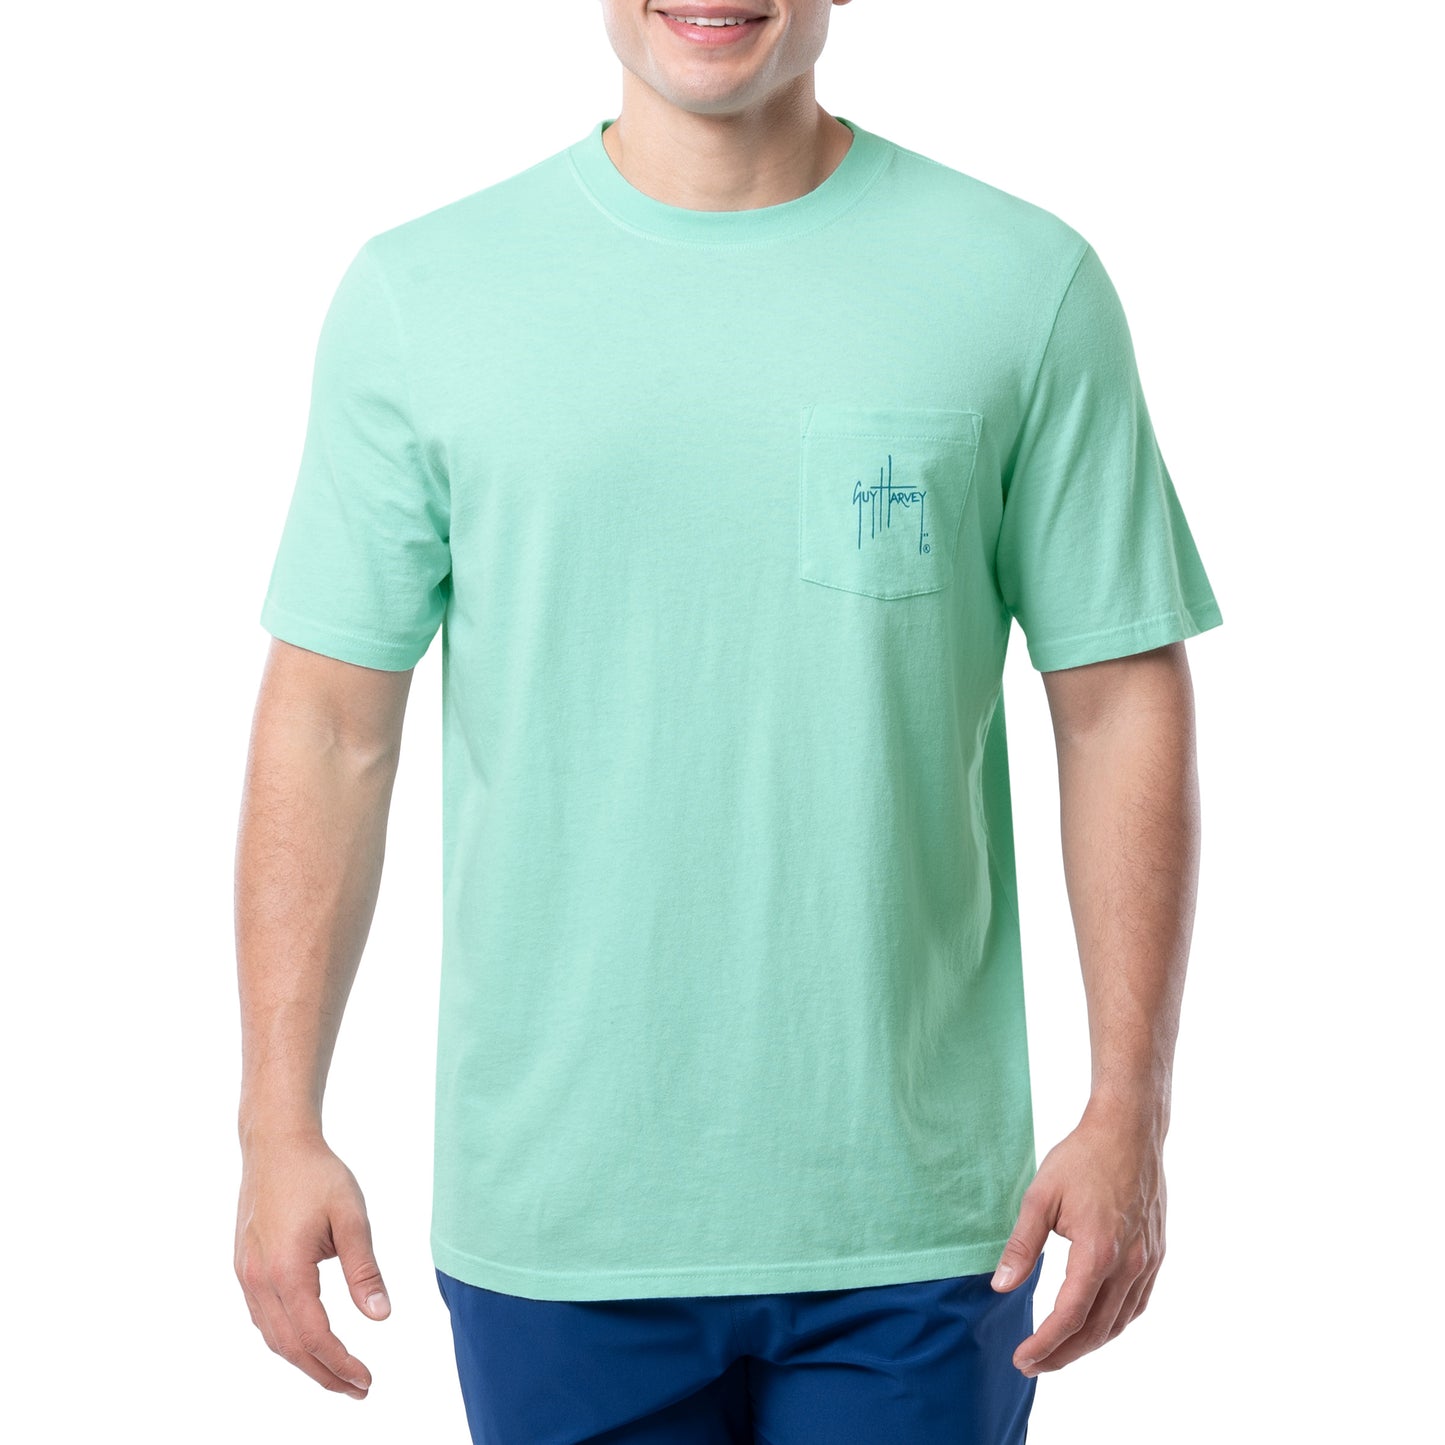 Guy Harvey Men's Short-Sleeve Graphic T-Shirt - Bright White - Size S